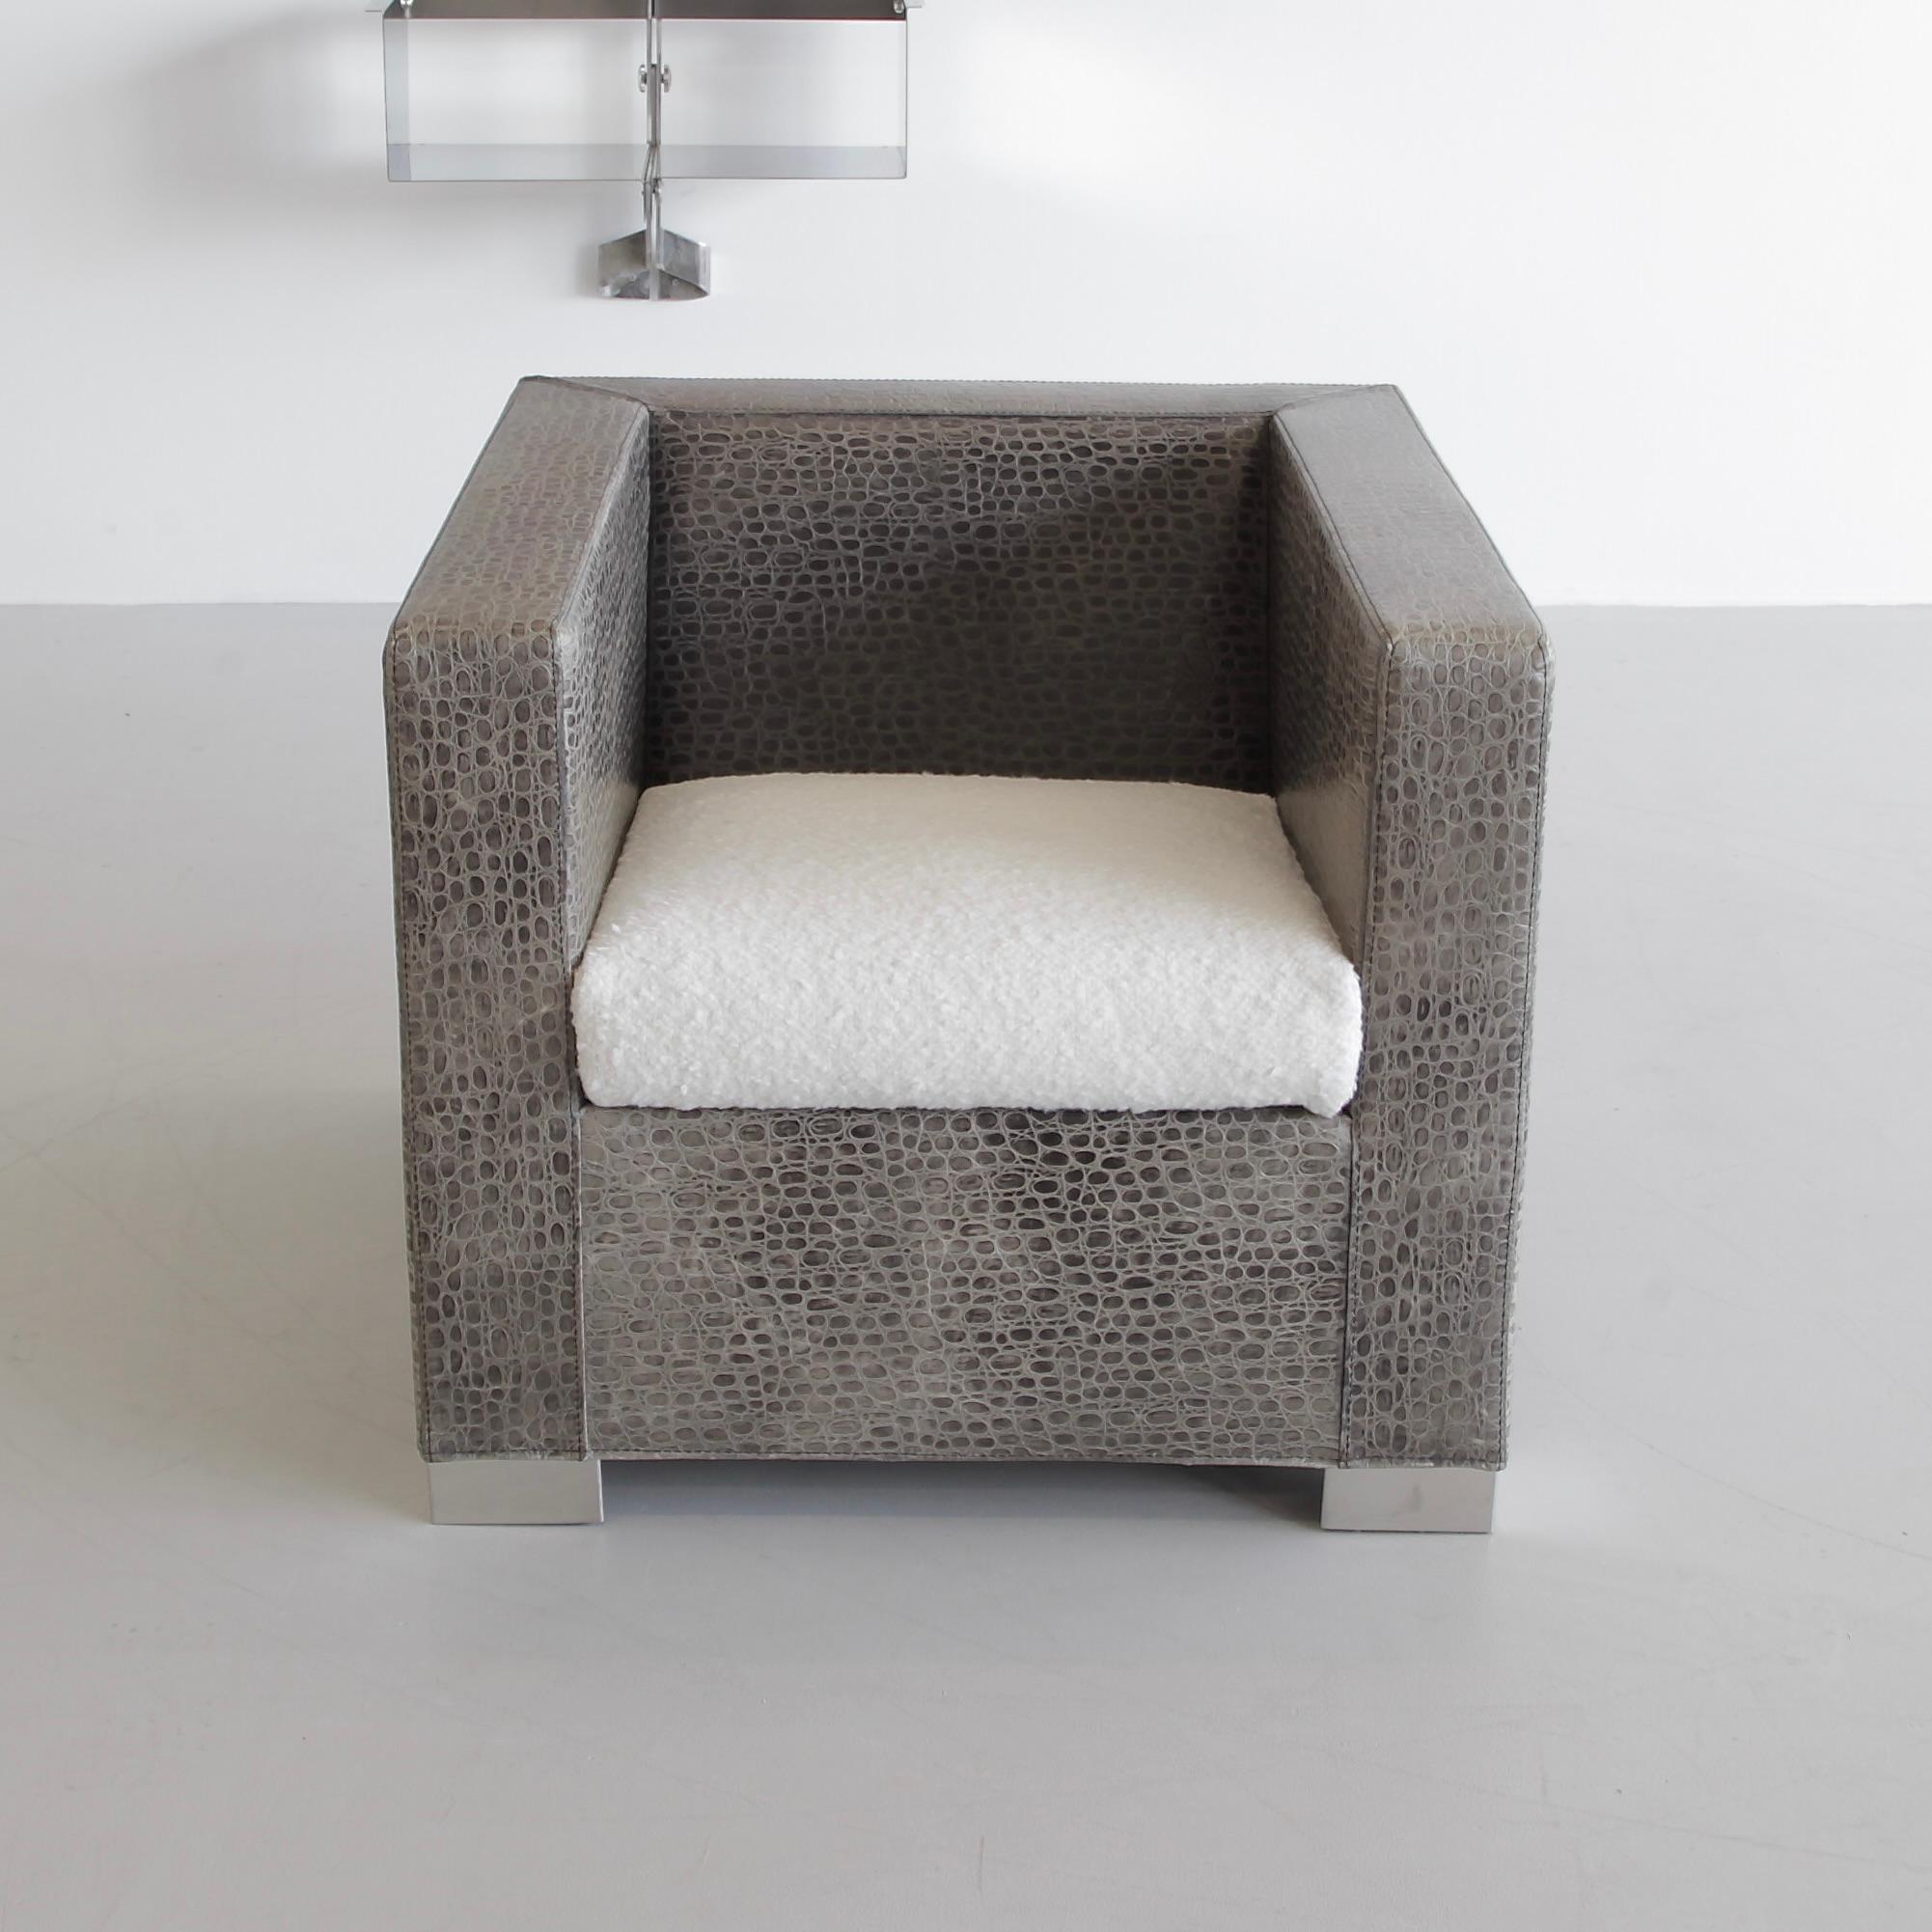 Fauteuil conçu par Rodolfo Dordoni. Italie, Minotti, 1997.

Le fauteuil cubique de la ligne 'Suitcase' de Minotti. Revêtu de cuir imprimé au 